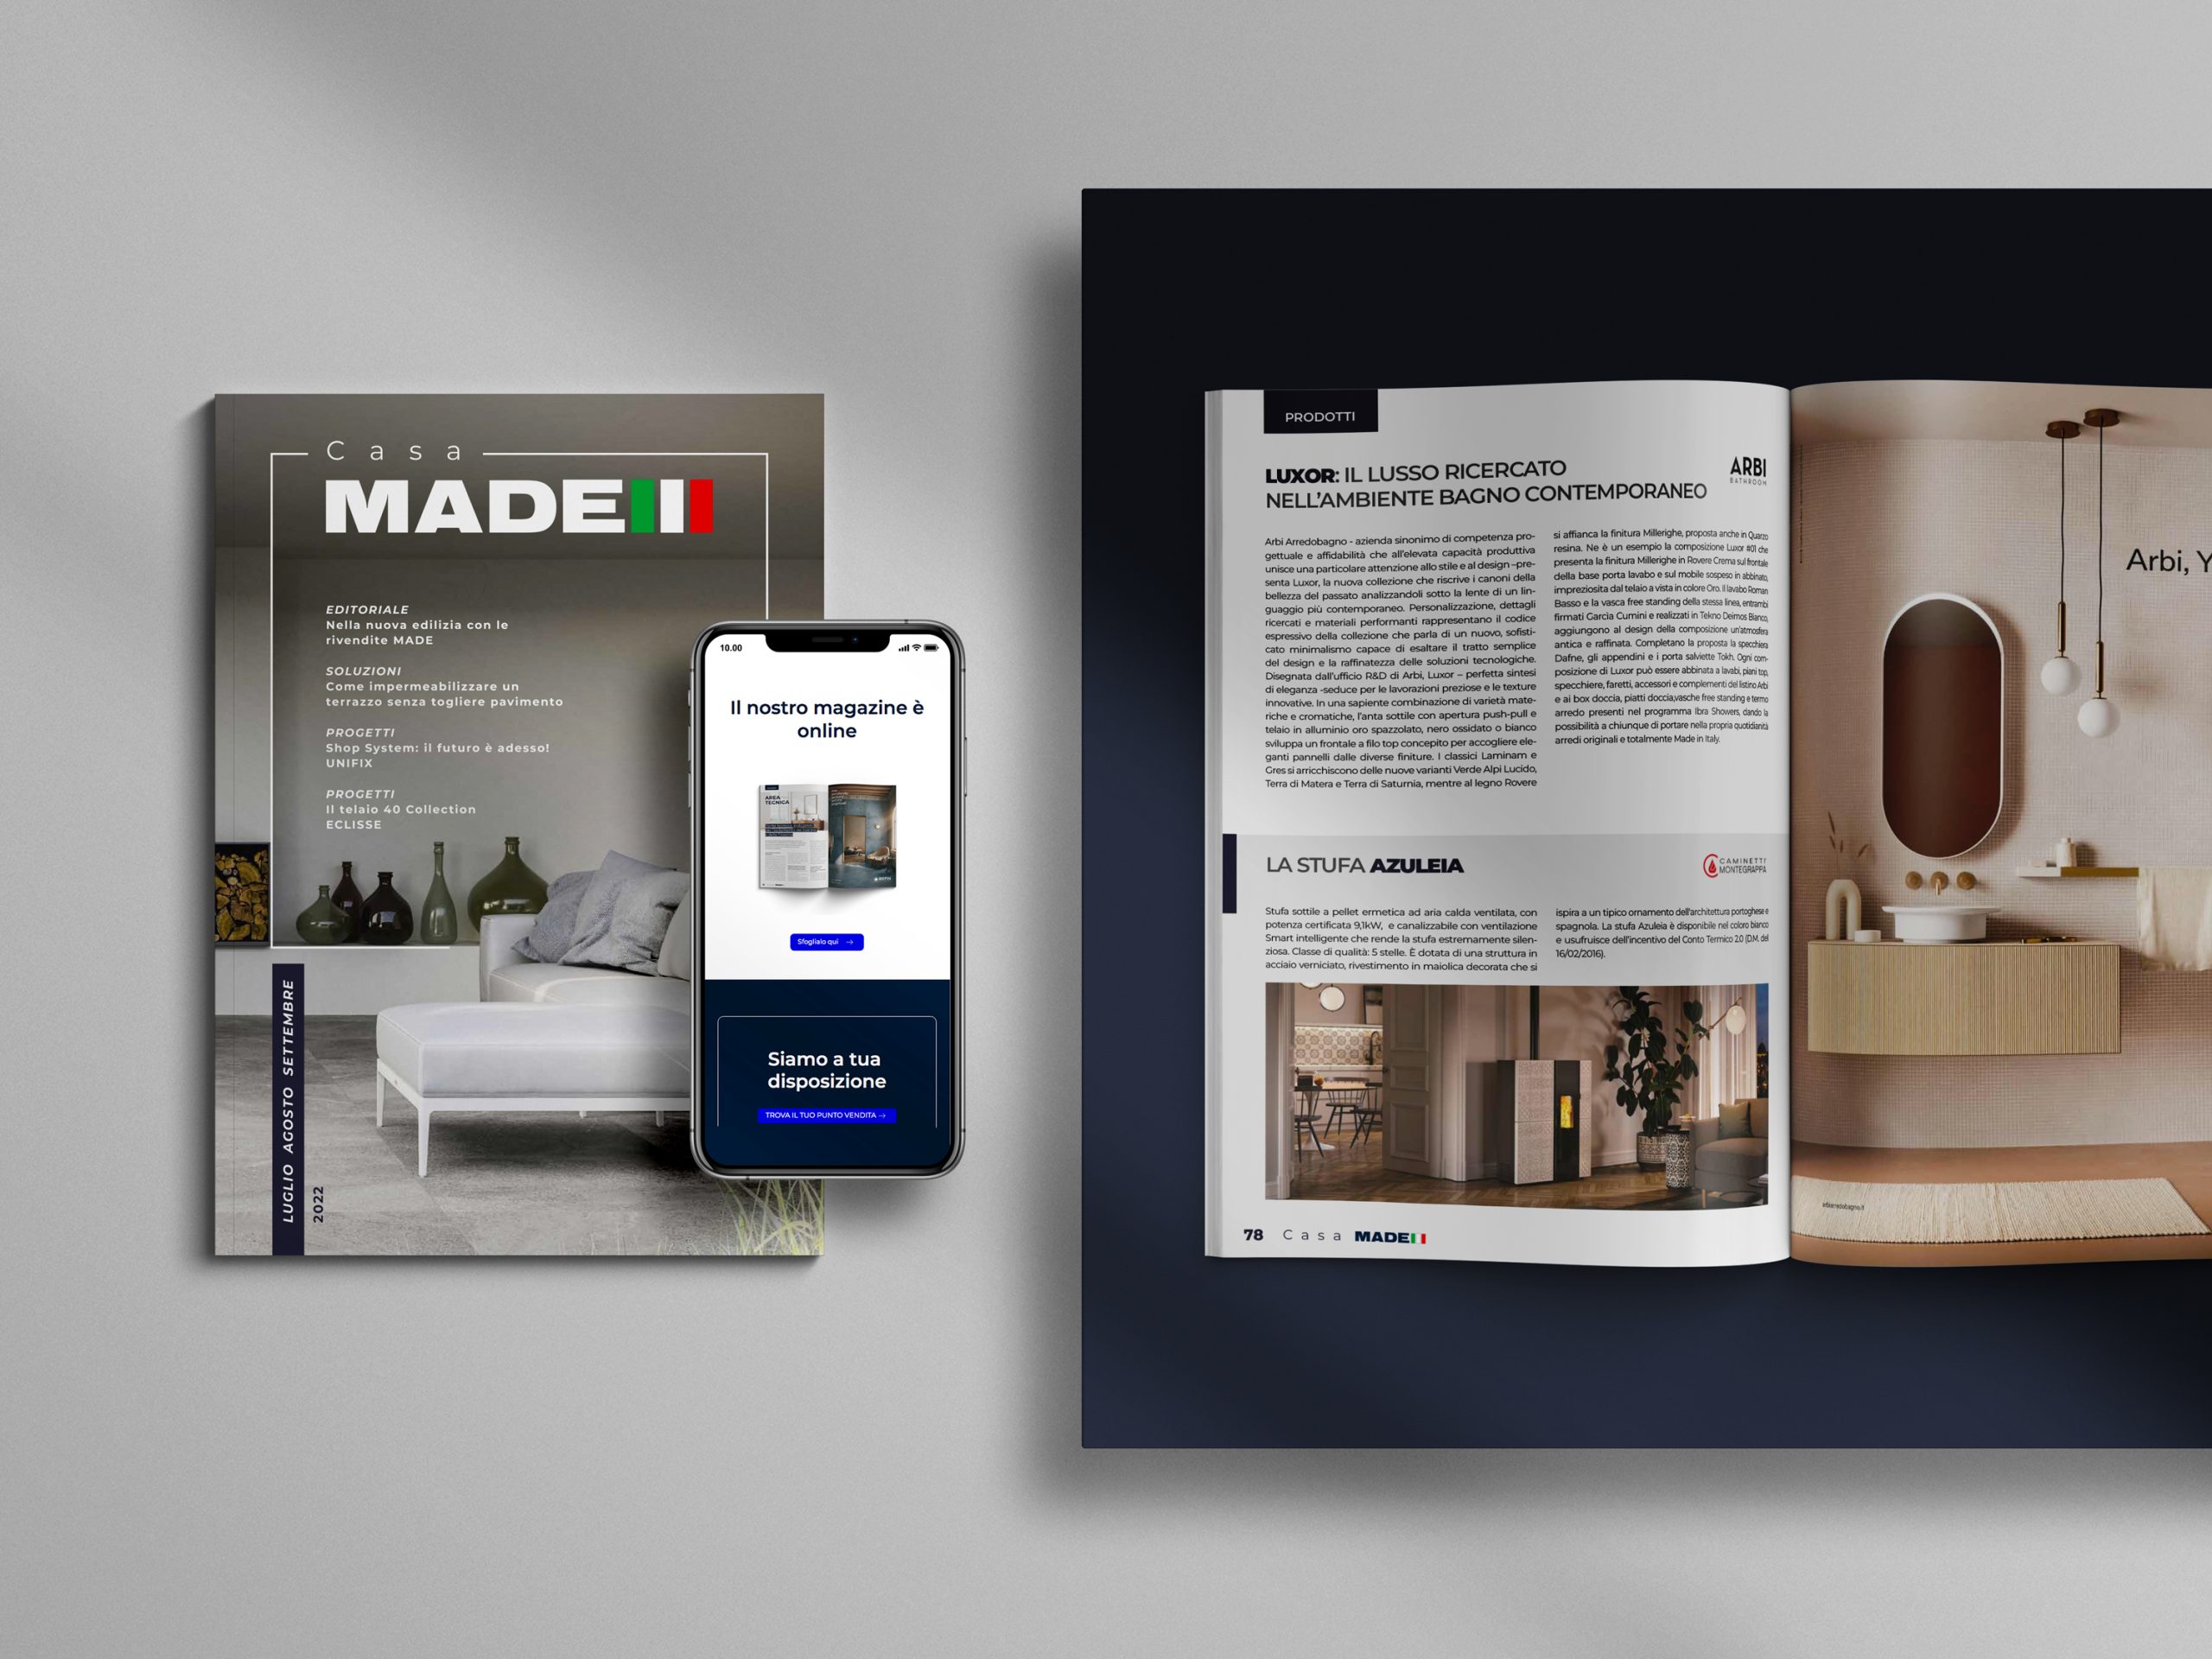 Presentazione Magazine cartaceo e digitale di Gruppo Made.